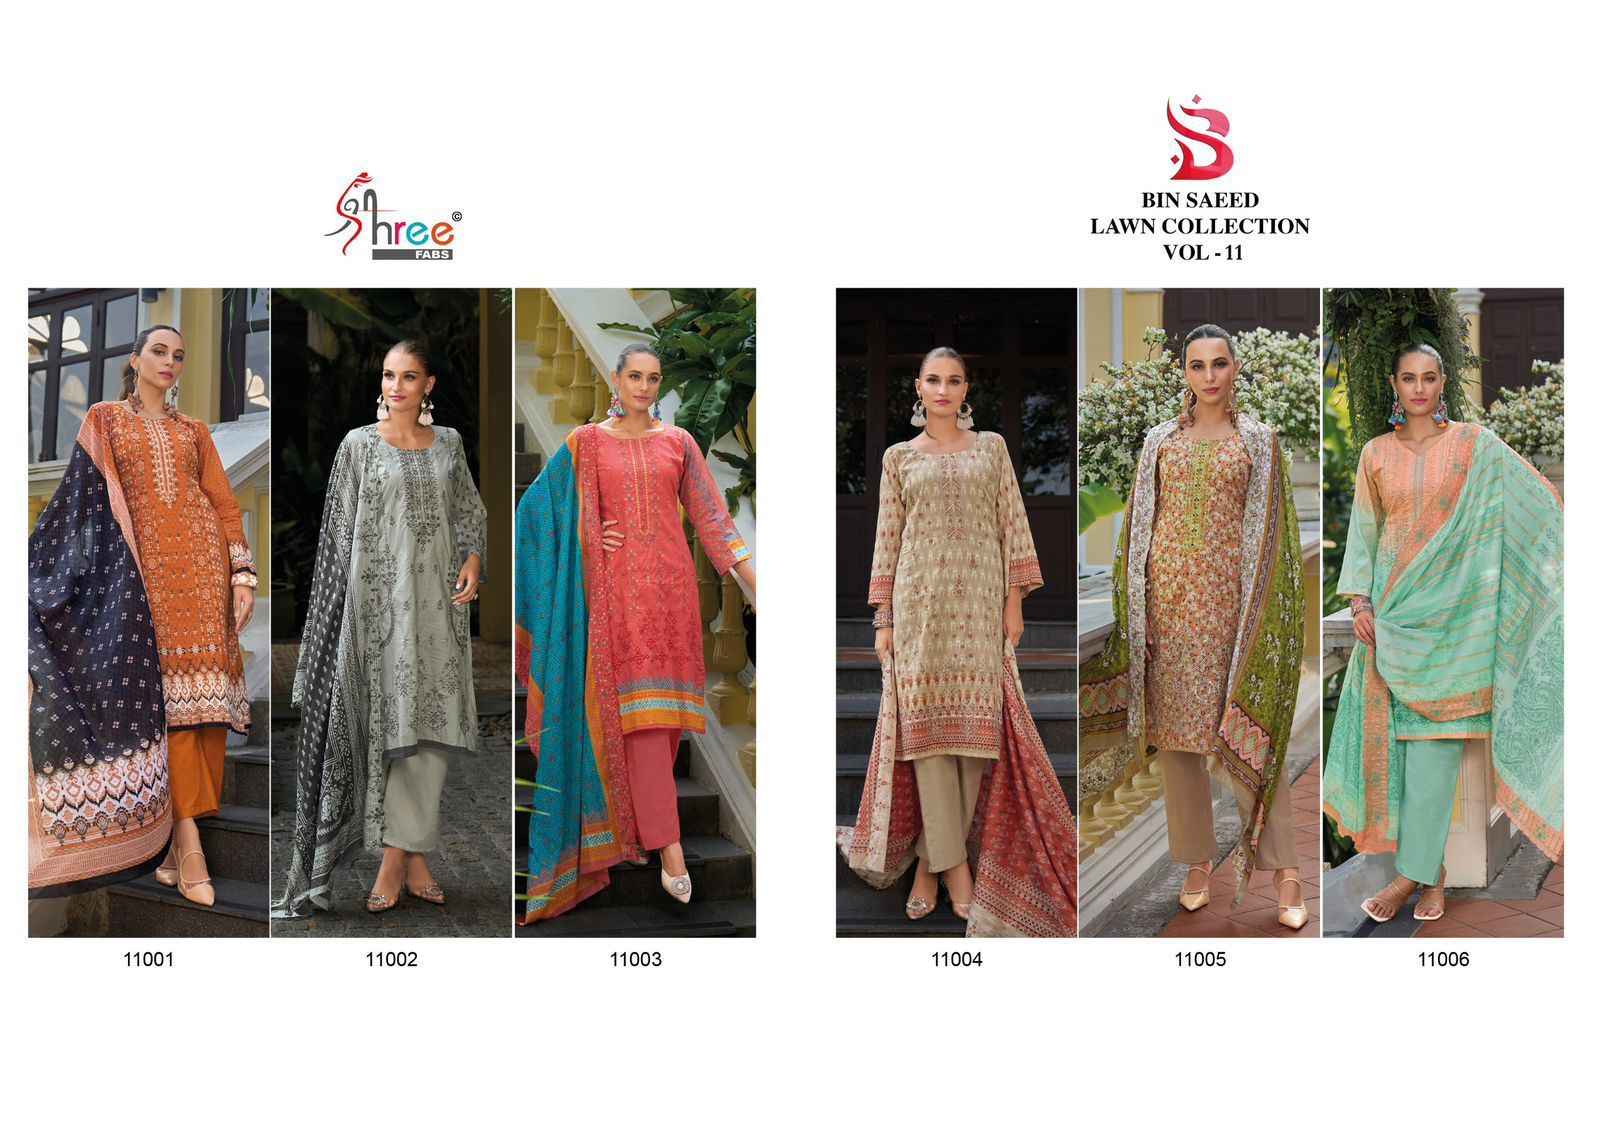 Shree Fabs Bin Saeed Lawn Collection Vol 11 Lawn Cotton Dress Material 6 pcs Catalogue